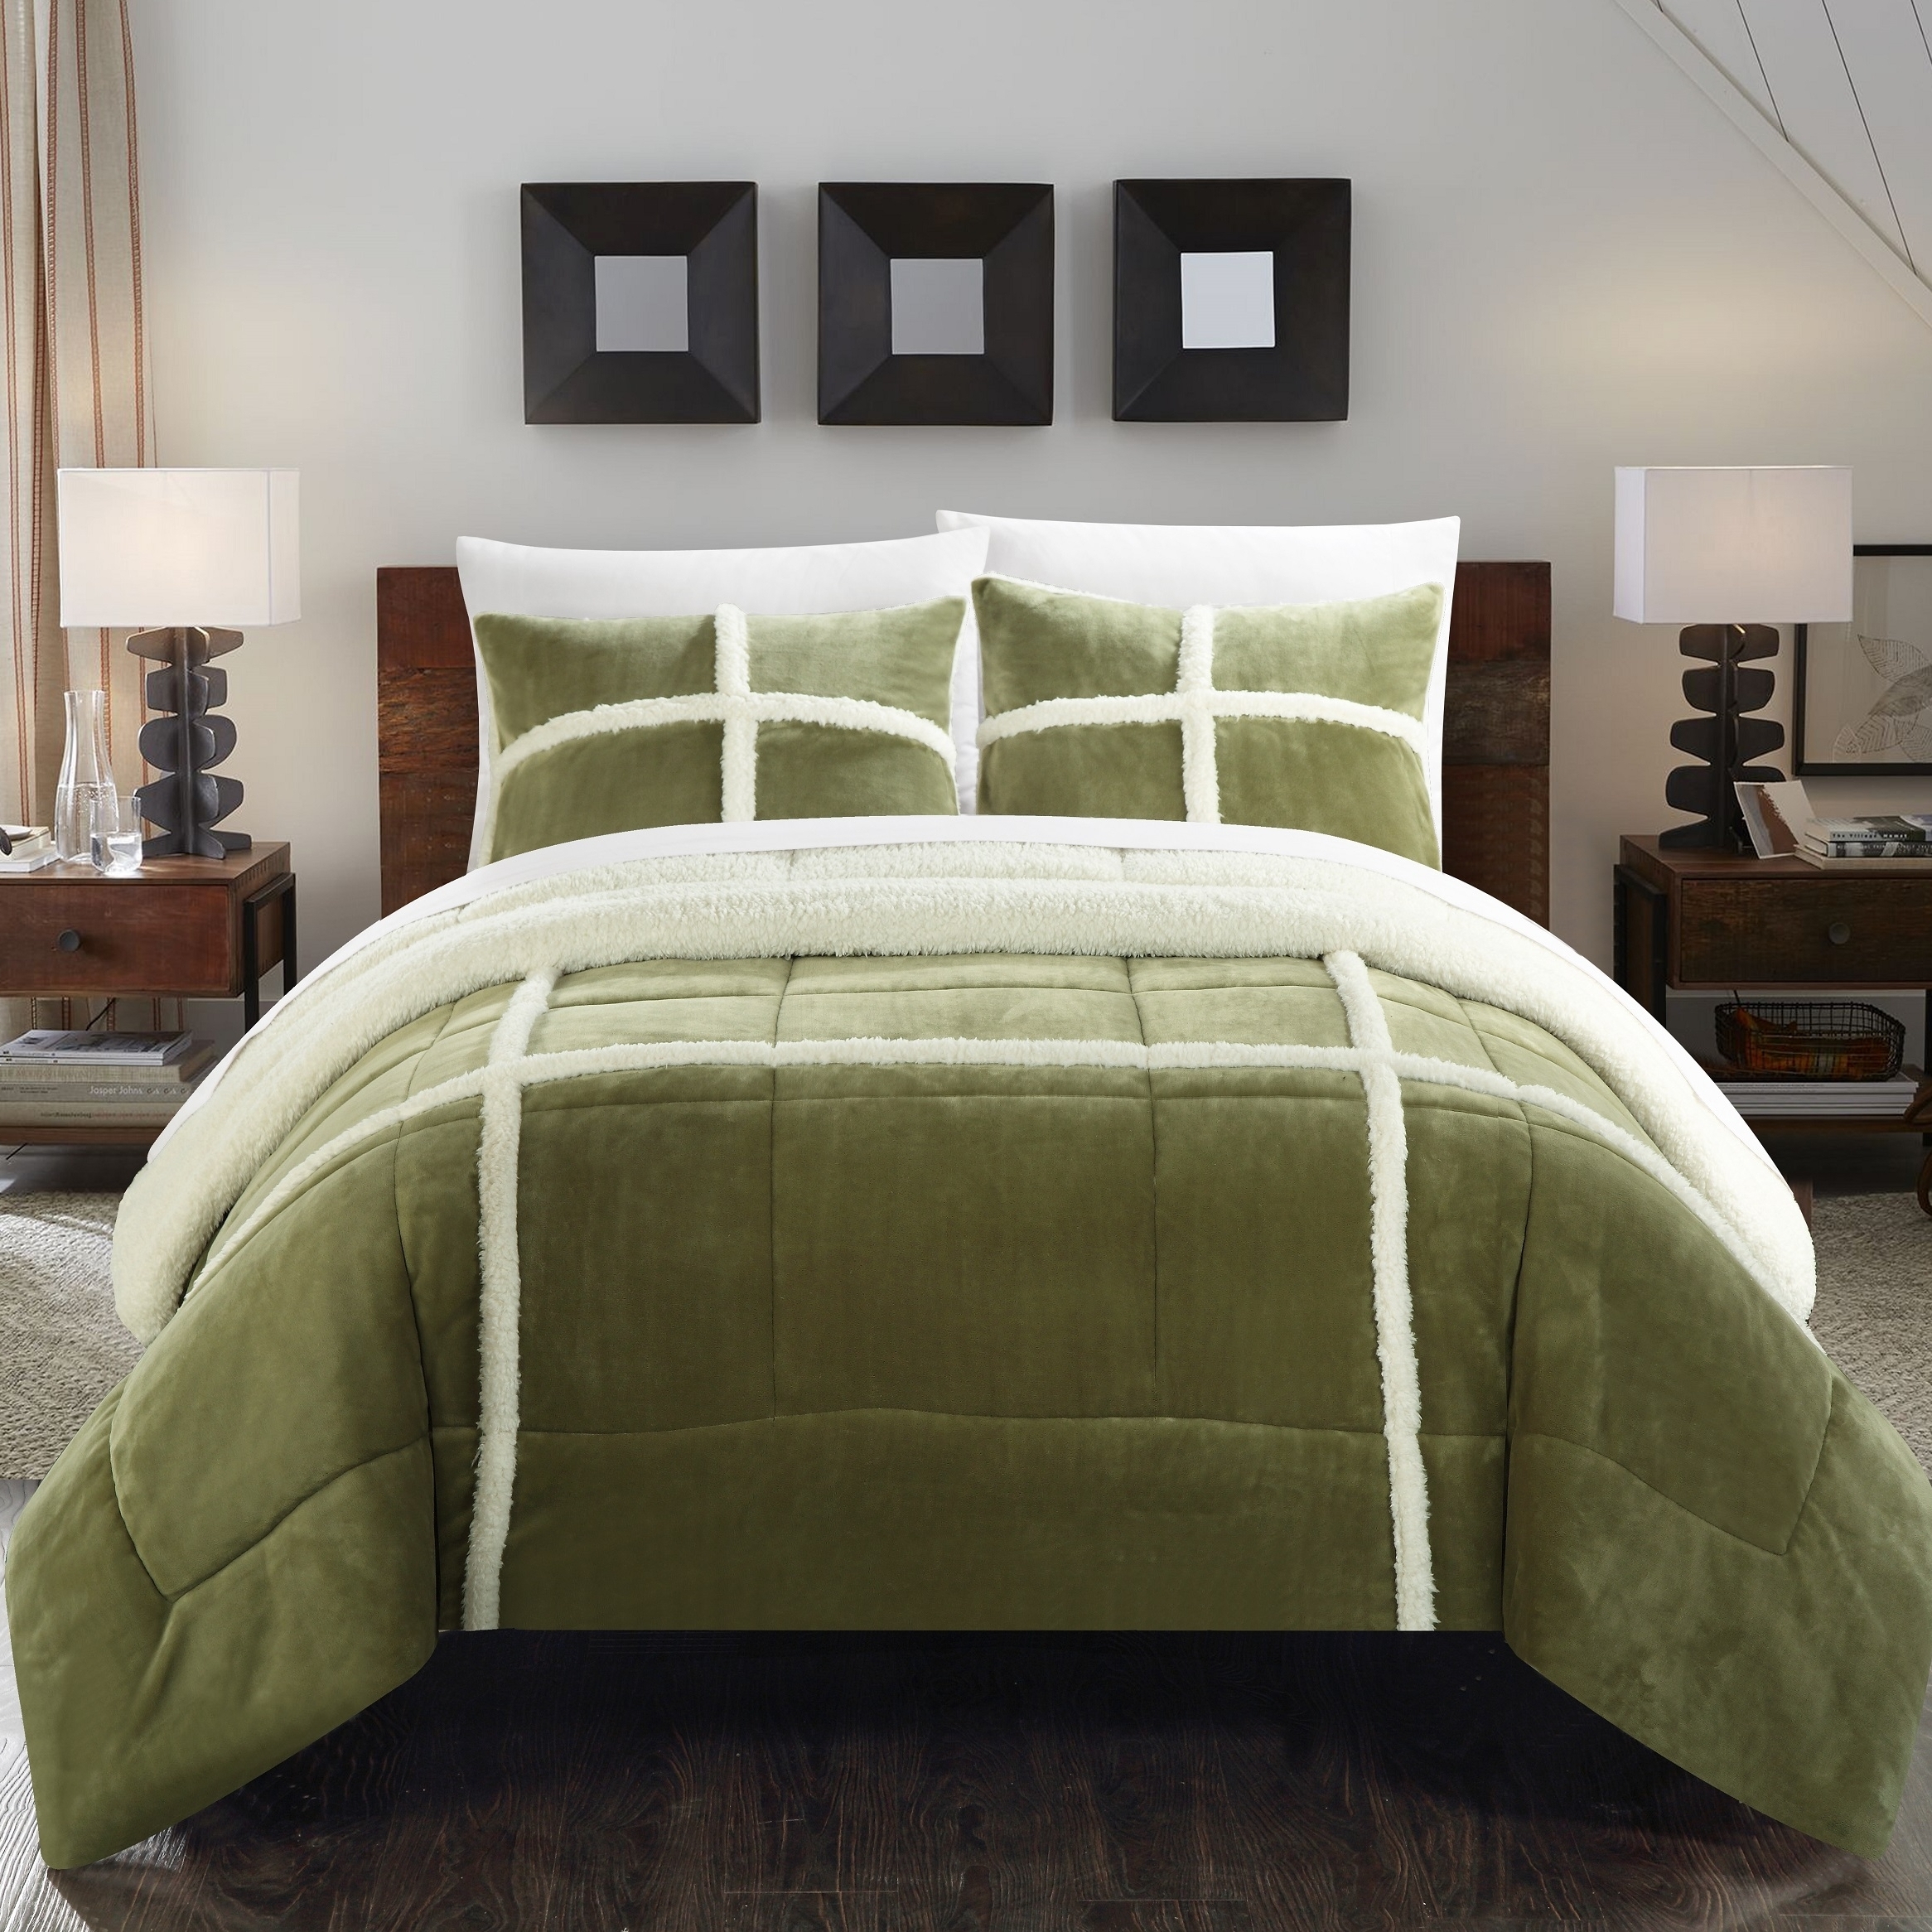 Chloe 3 Or 2 Piece Comforter Set Ultra Plush Micro Mink Sherpa Lined Bedding â Decorative Pillow Shams Included - Green, Twin - 2 Piece